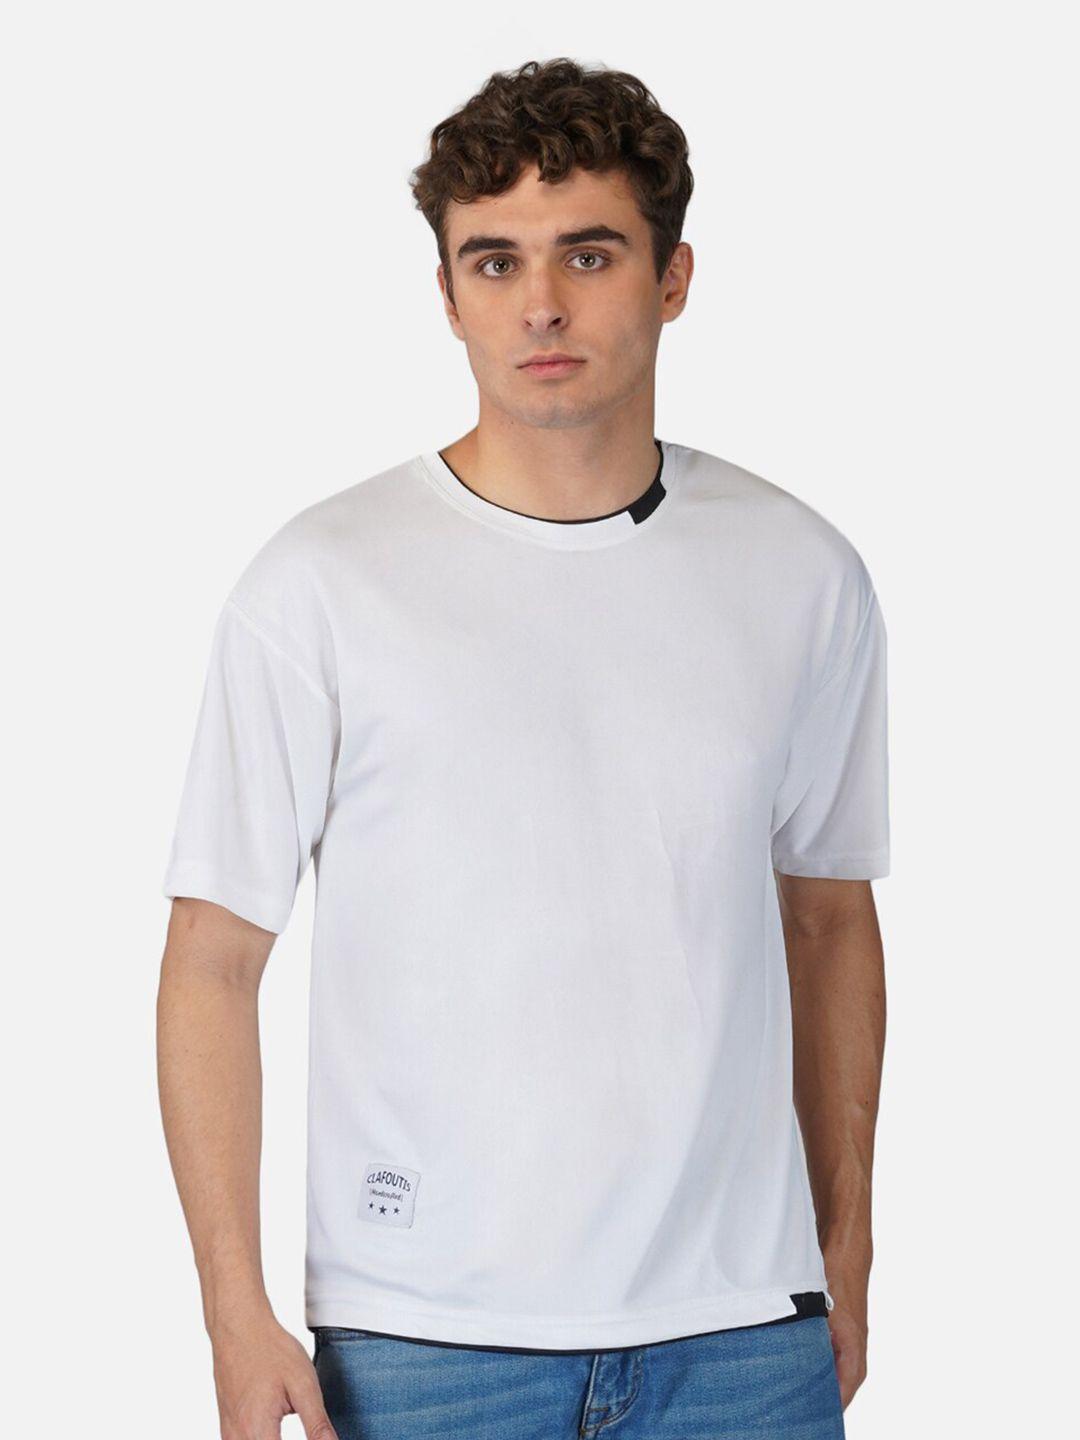 clafoutis men white solid t-shirt